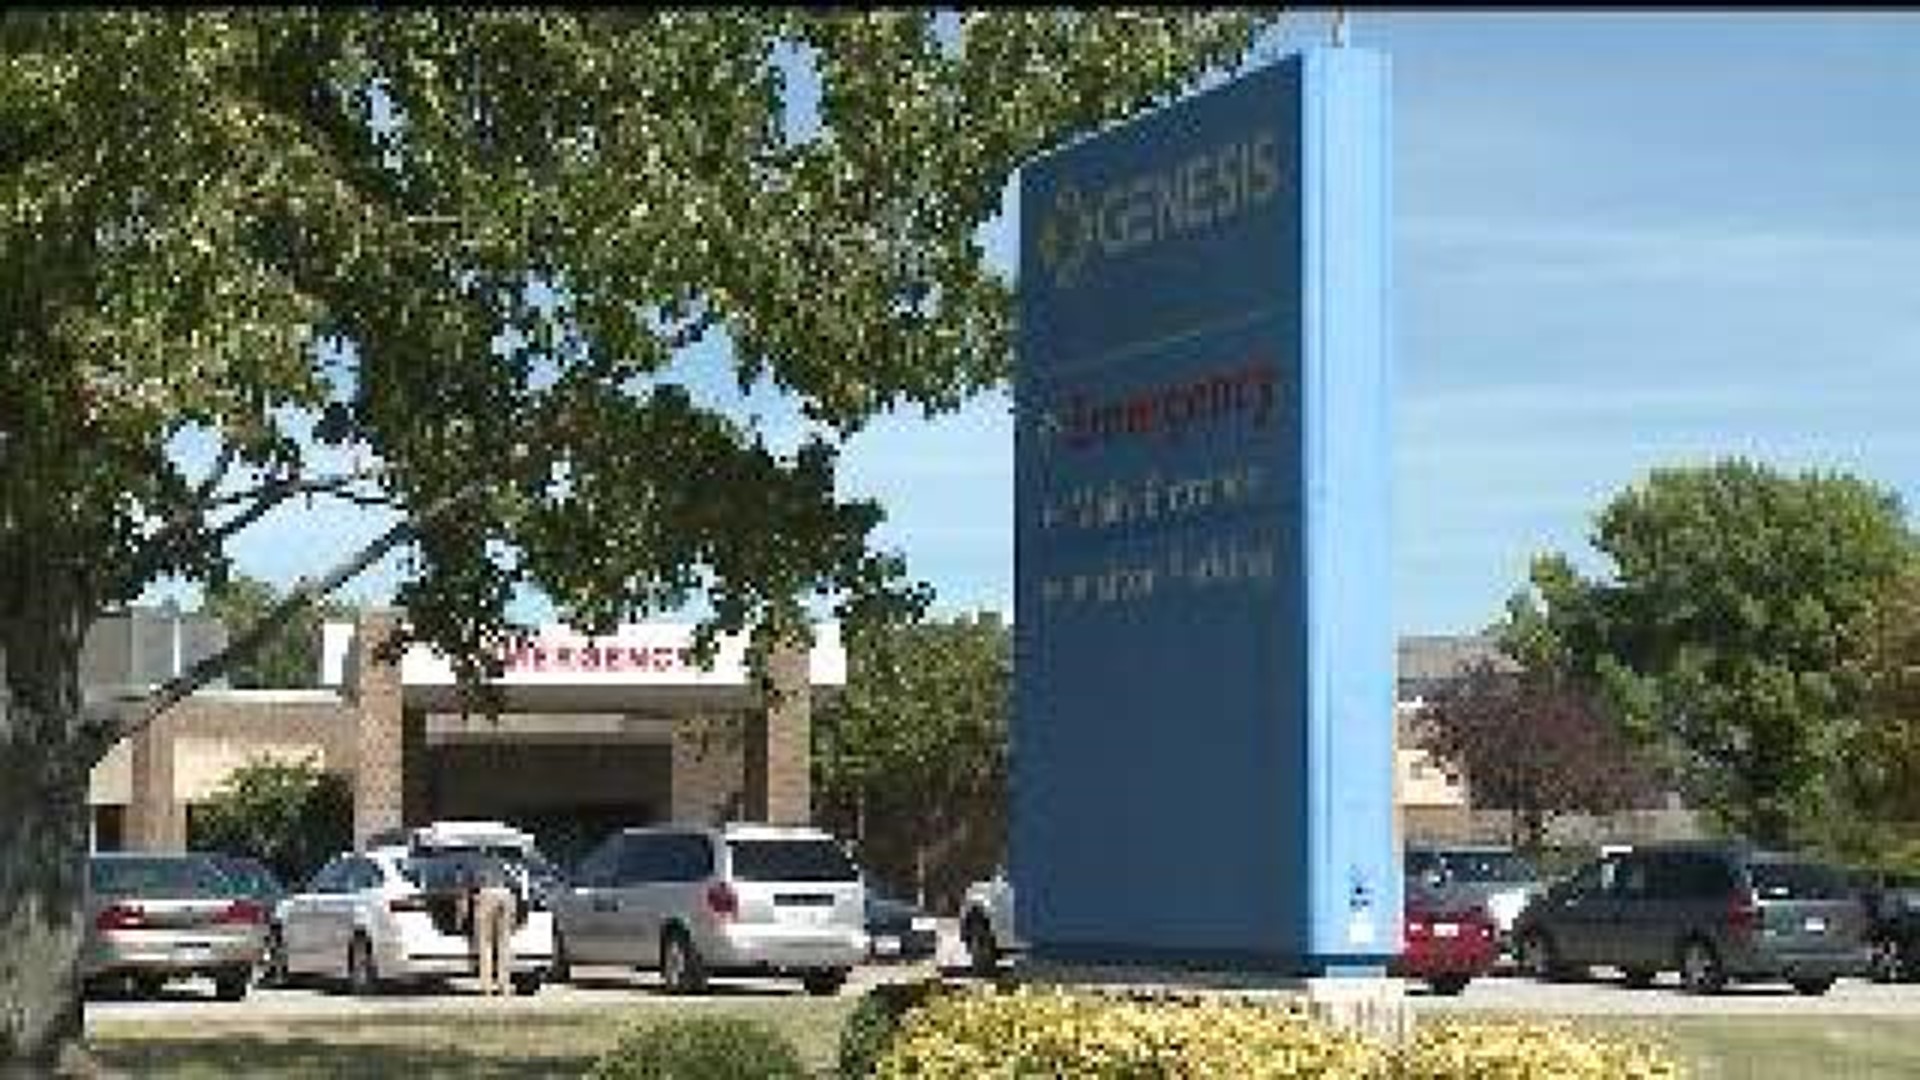 Genesis medical center gets name change in Silvis